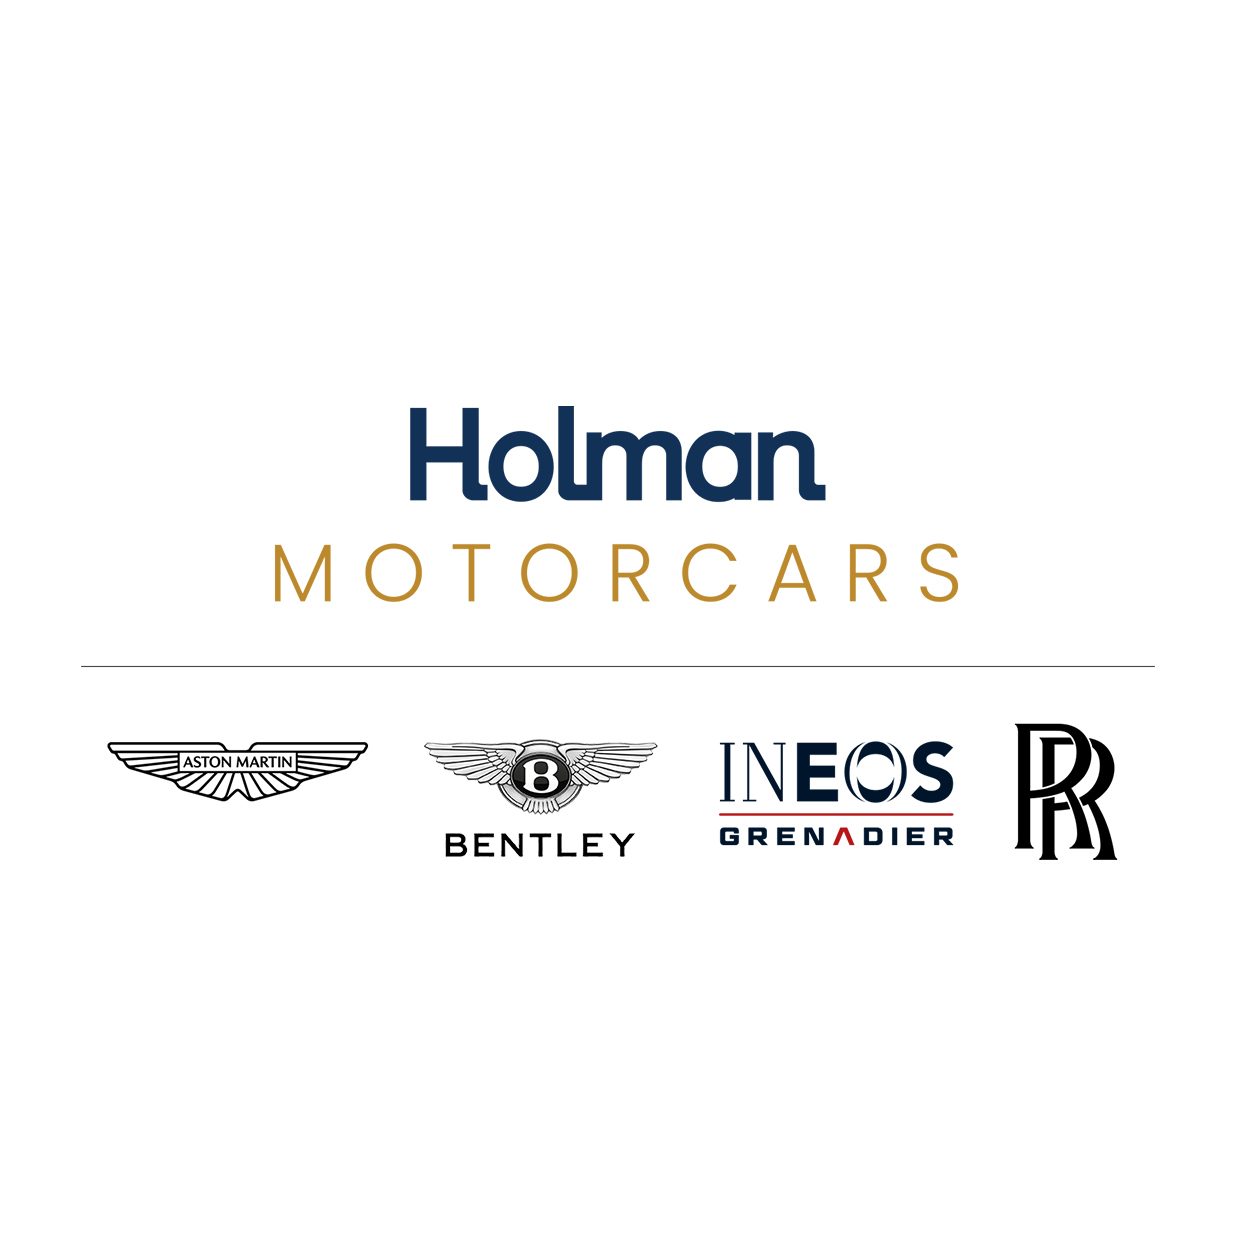 Holman Motorcars logo